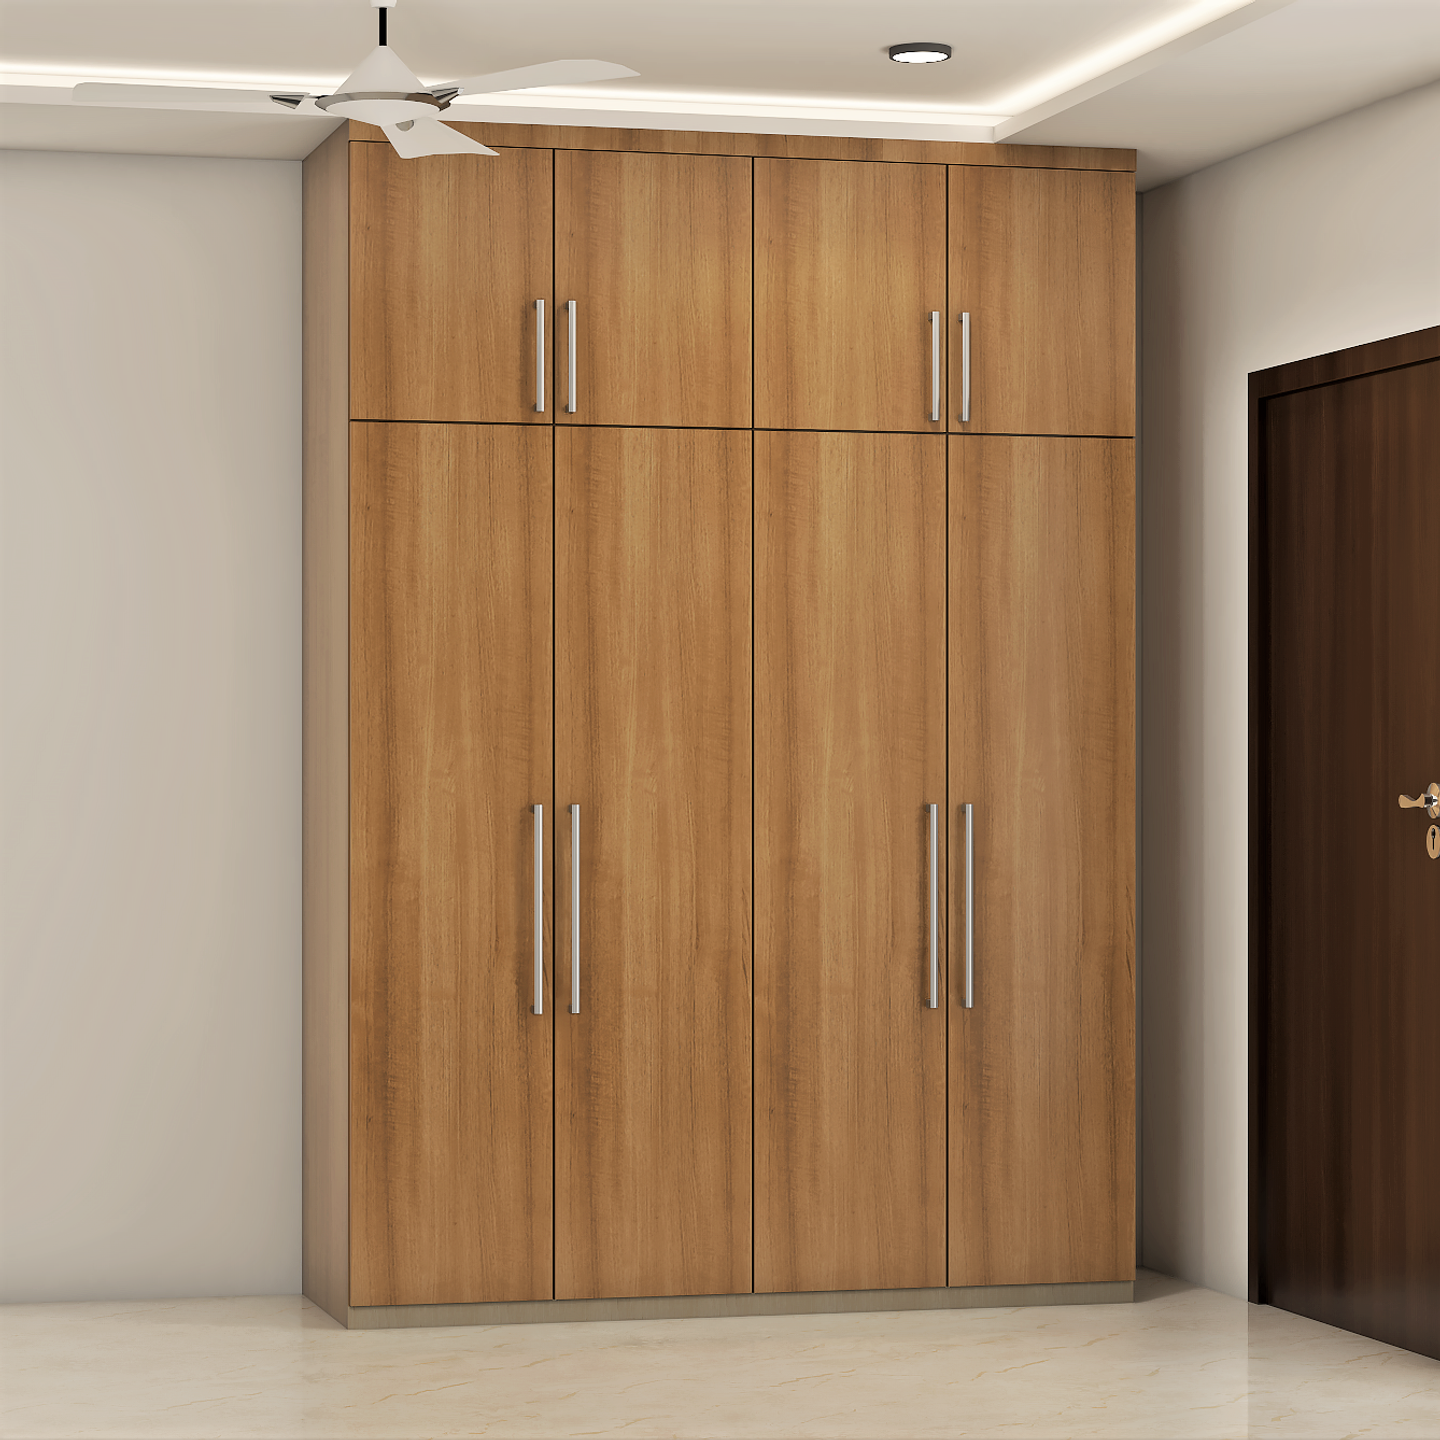 Compact Modular Wooden Finish Wardrobe Design - Livspace